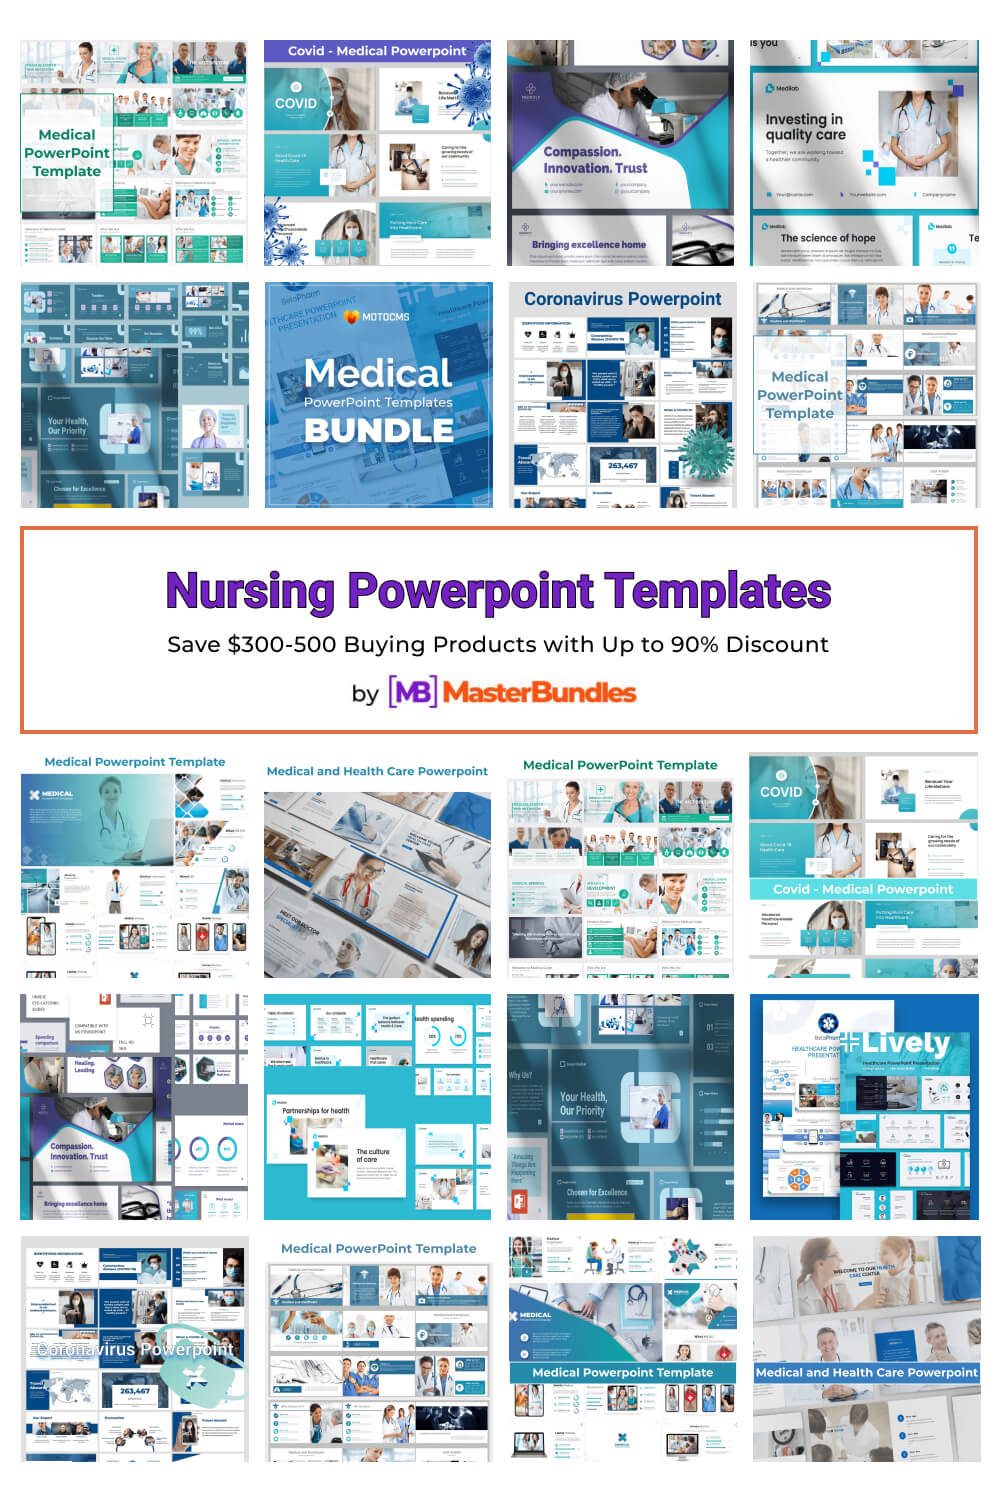 nursing powerpoint templates pinterest image.